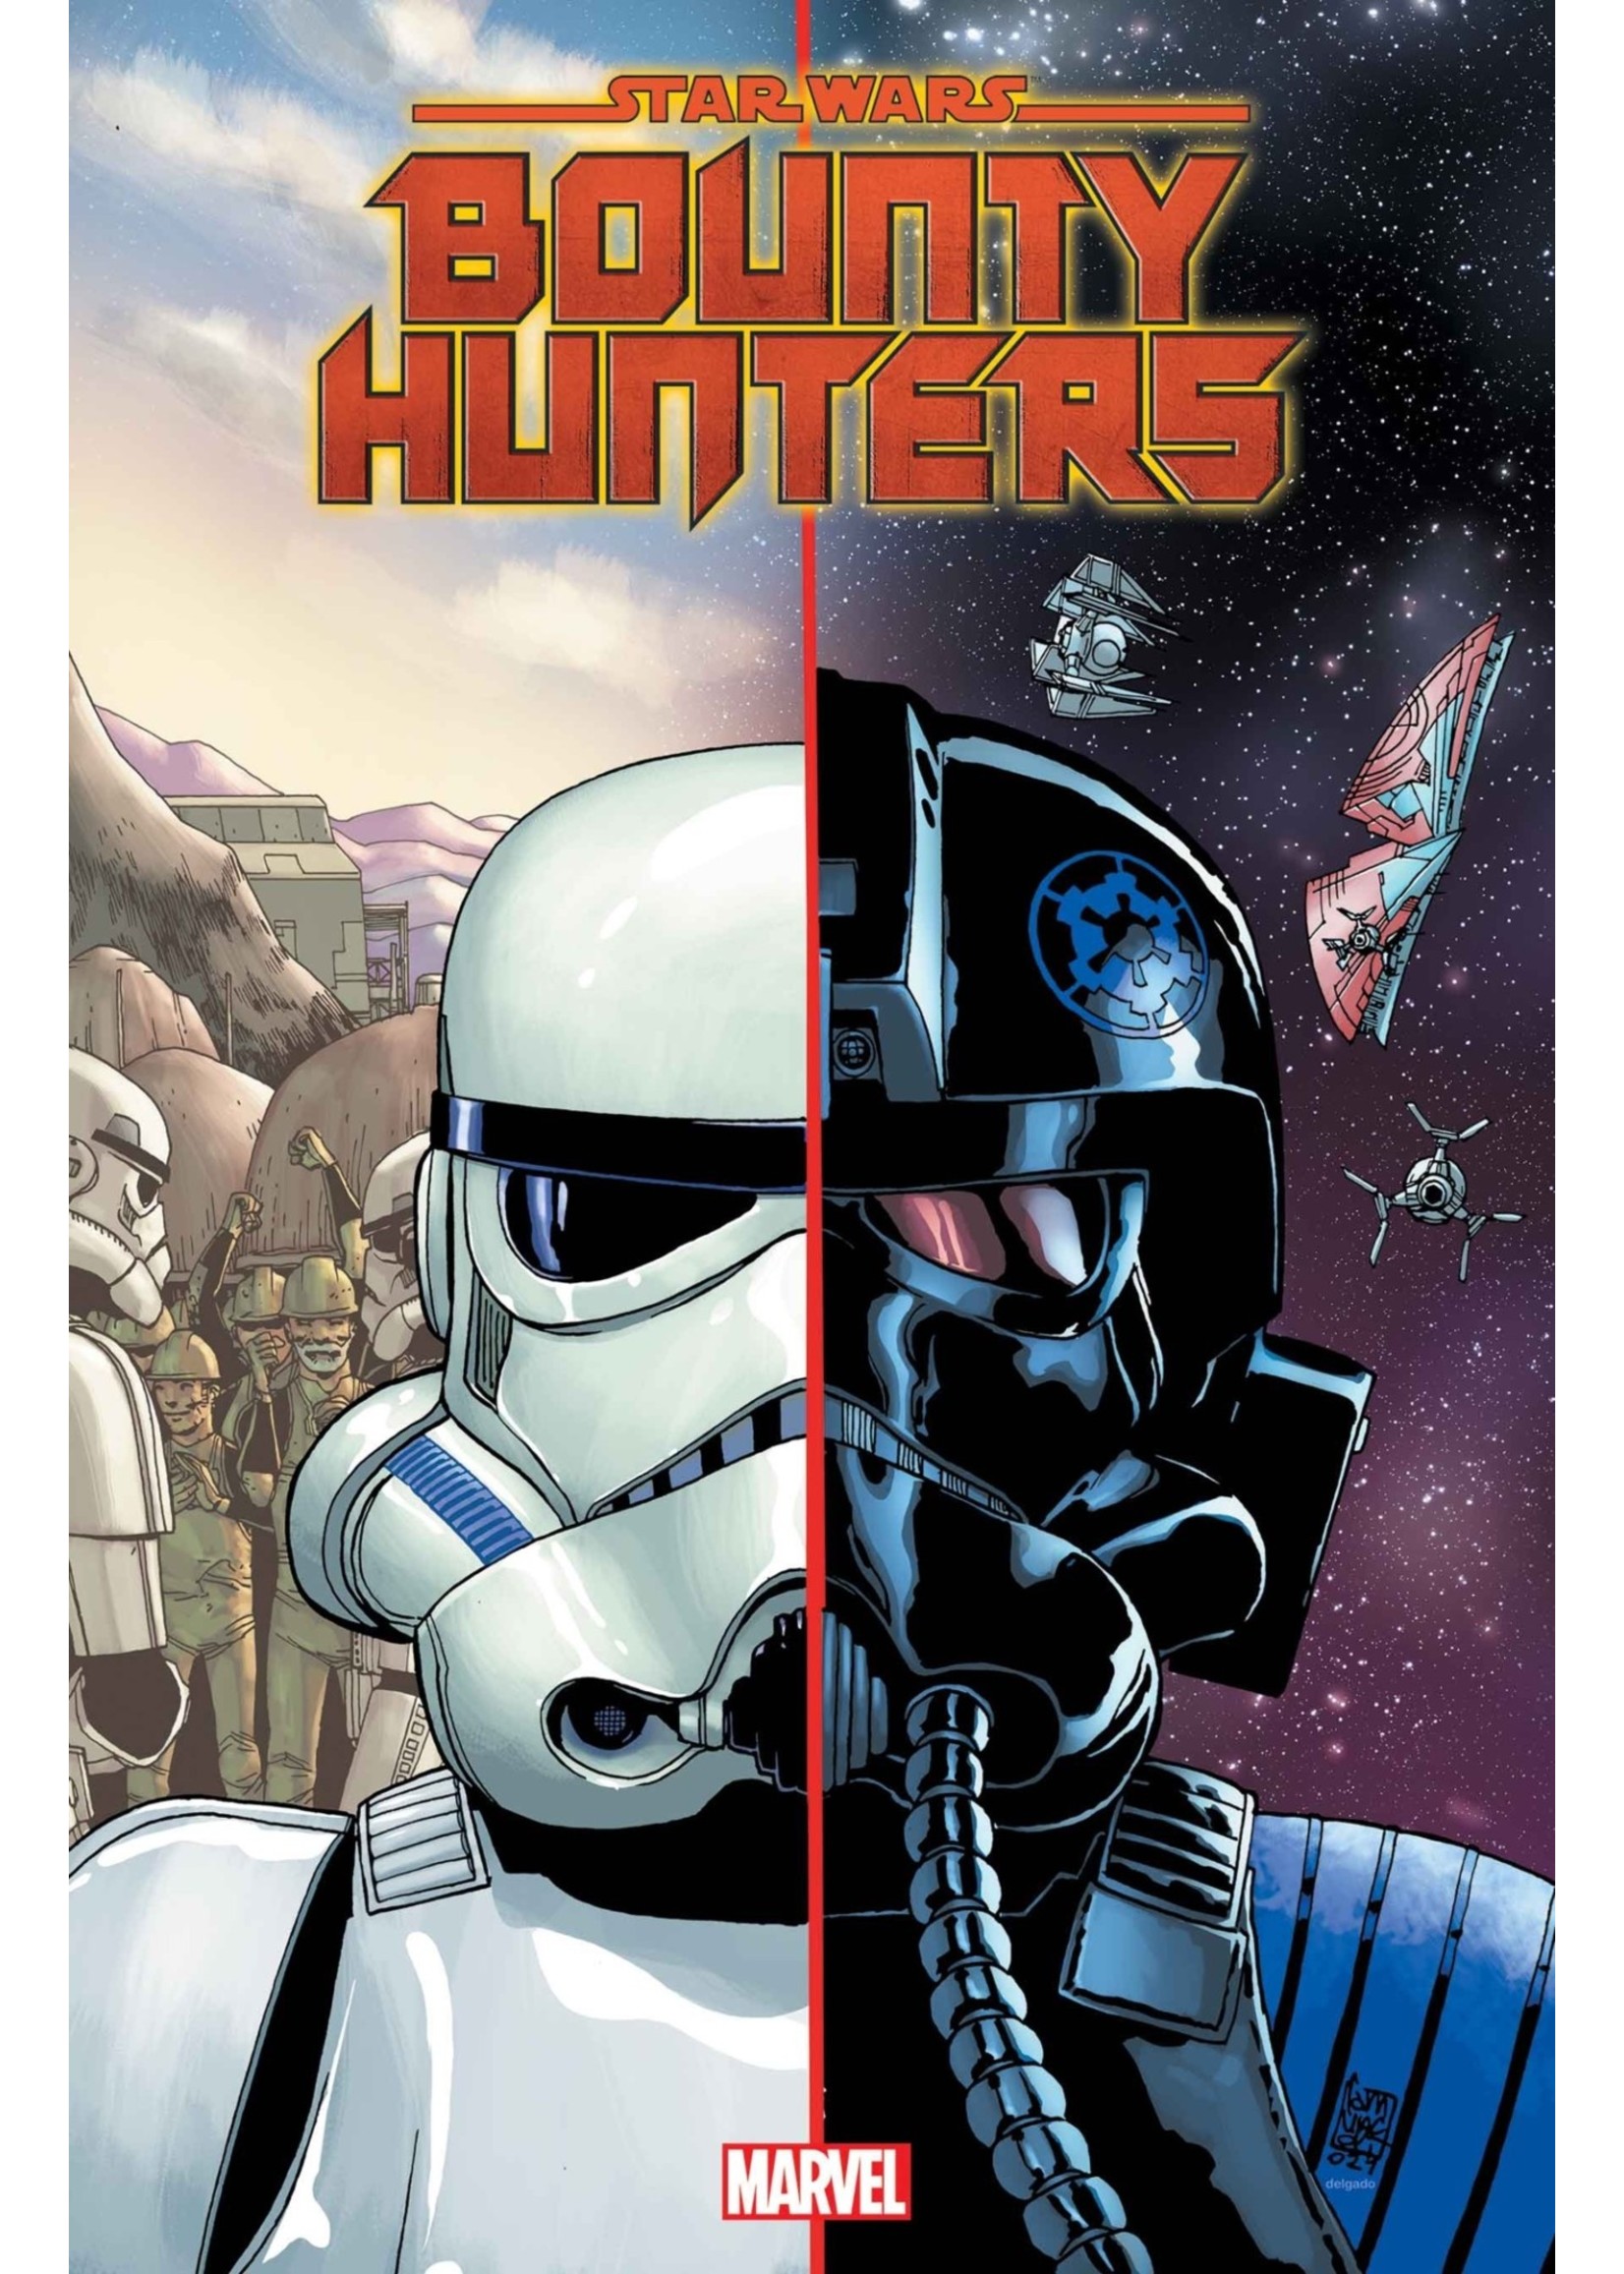 Star Wars Star Wars: Bounty Hunters #19